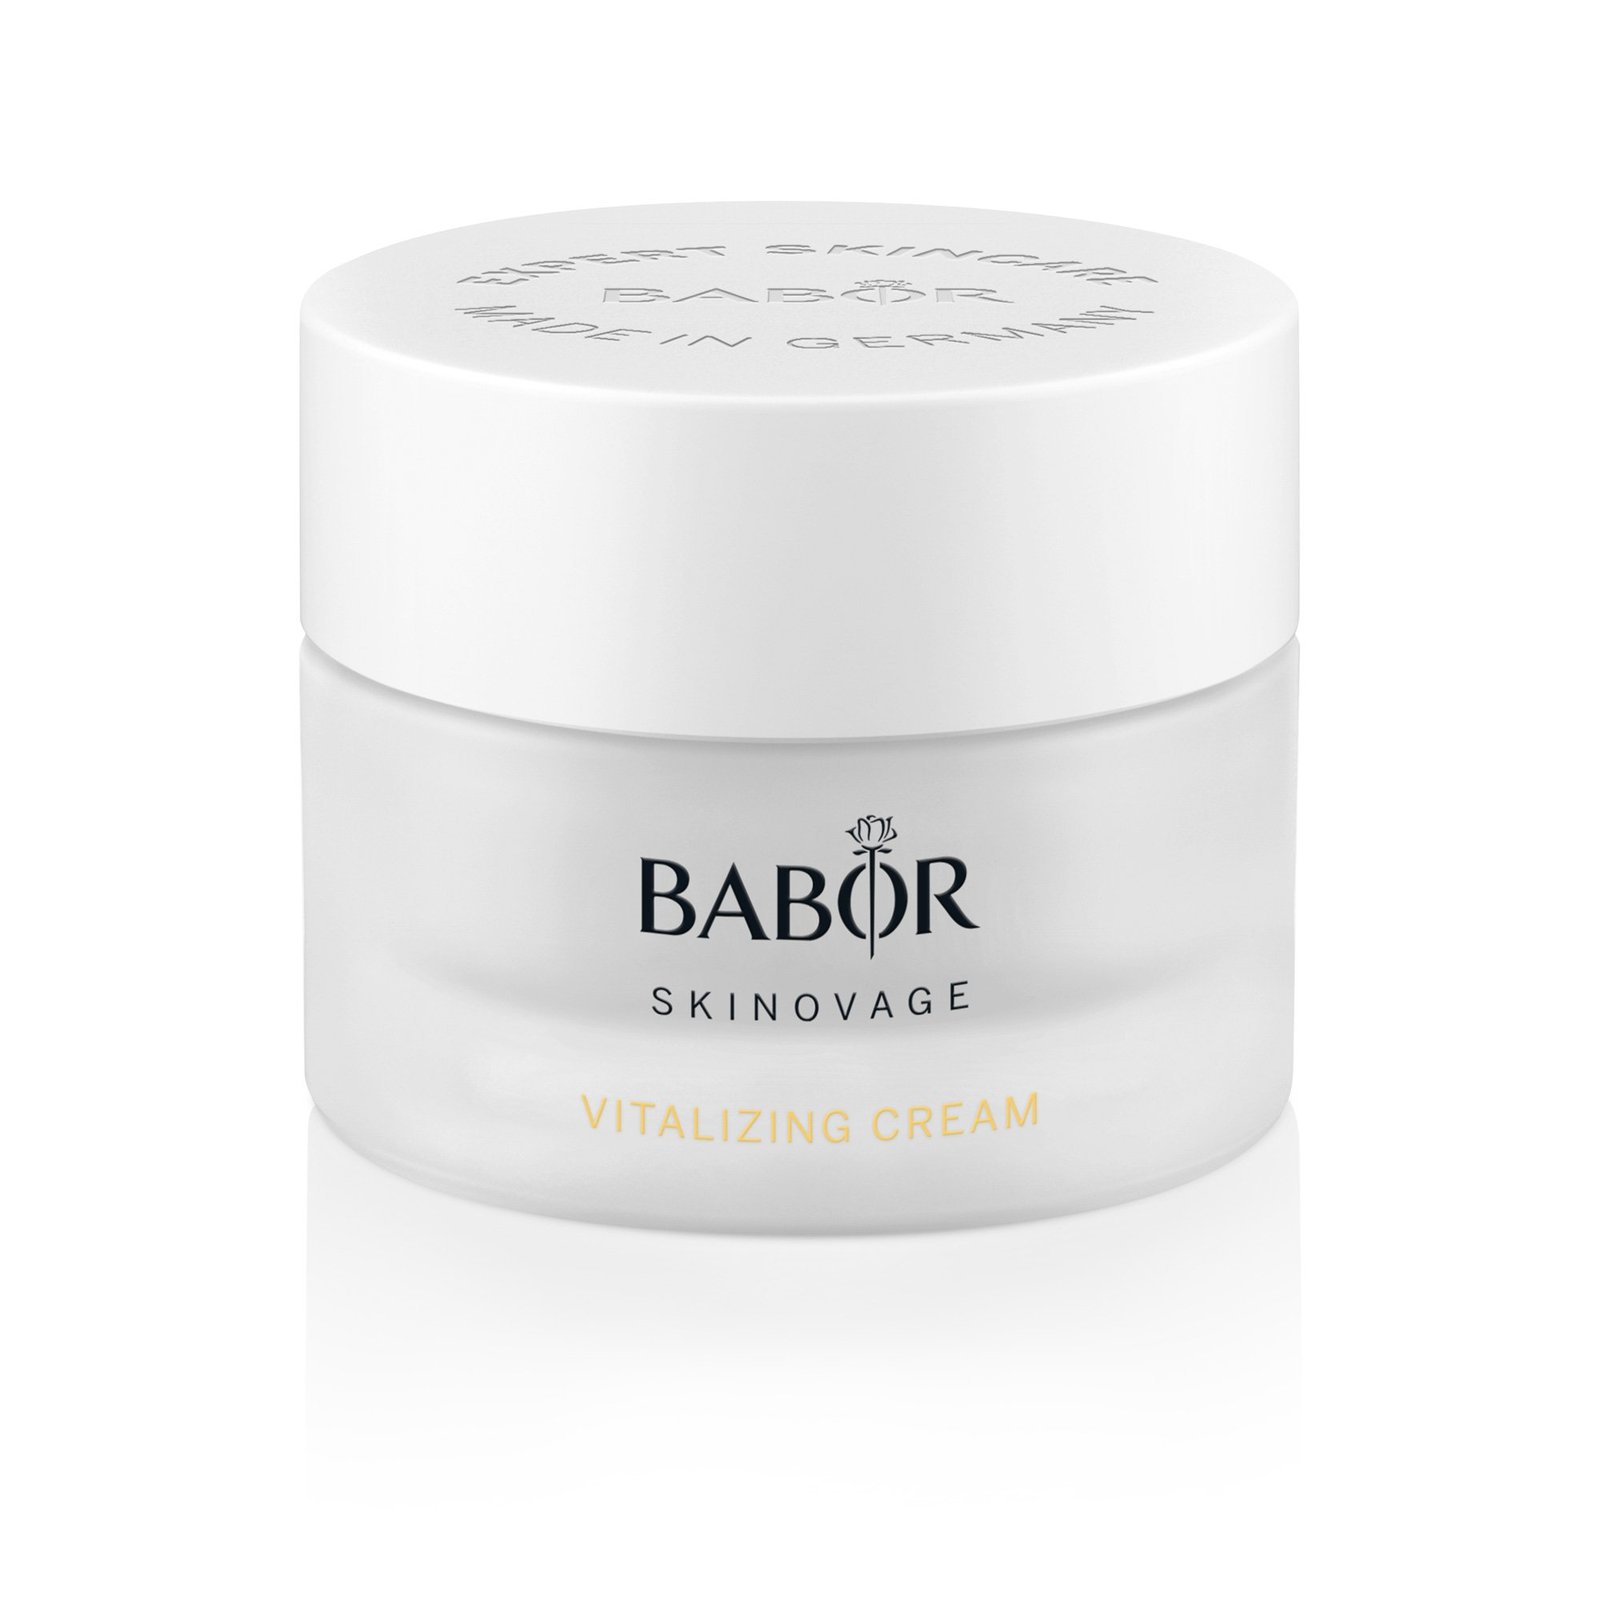 BABOR Skinovage Vitalizing Cream 50ml